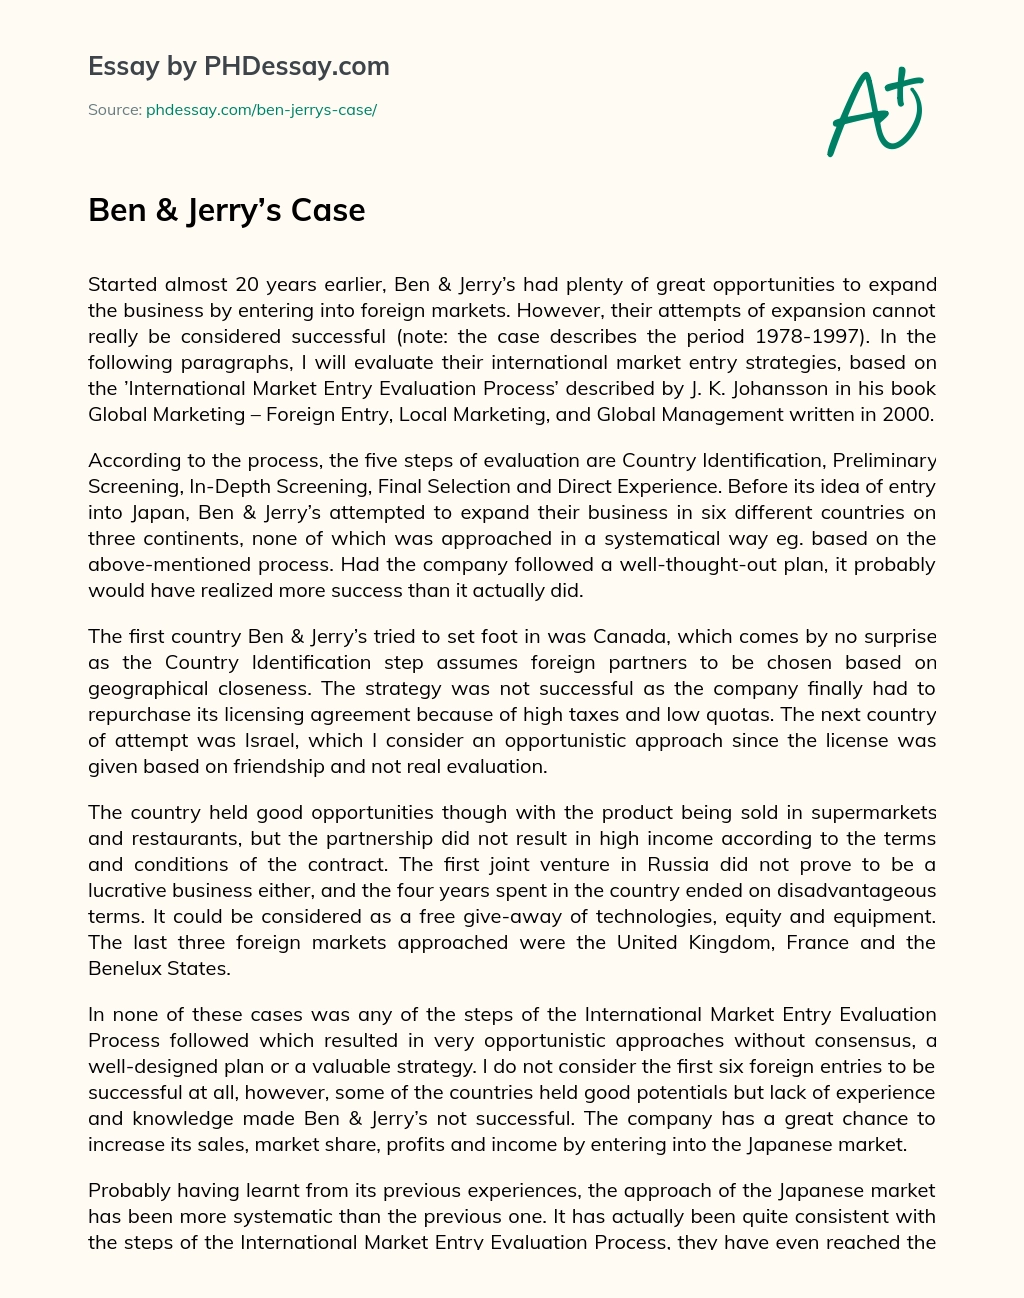 Ben & Jerry’s Case essay